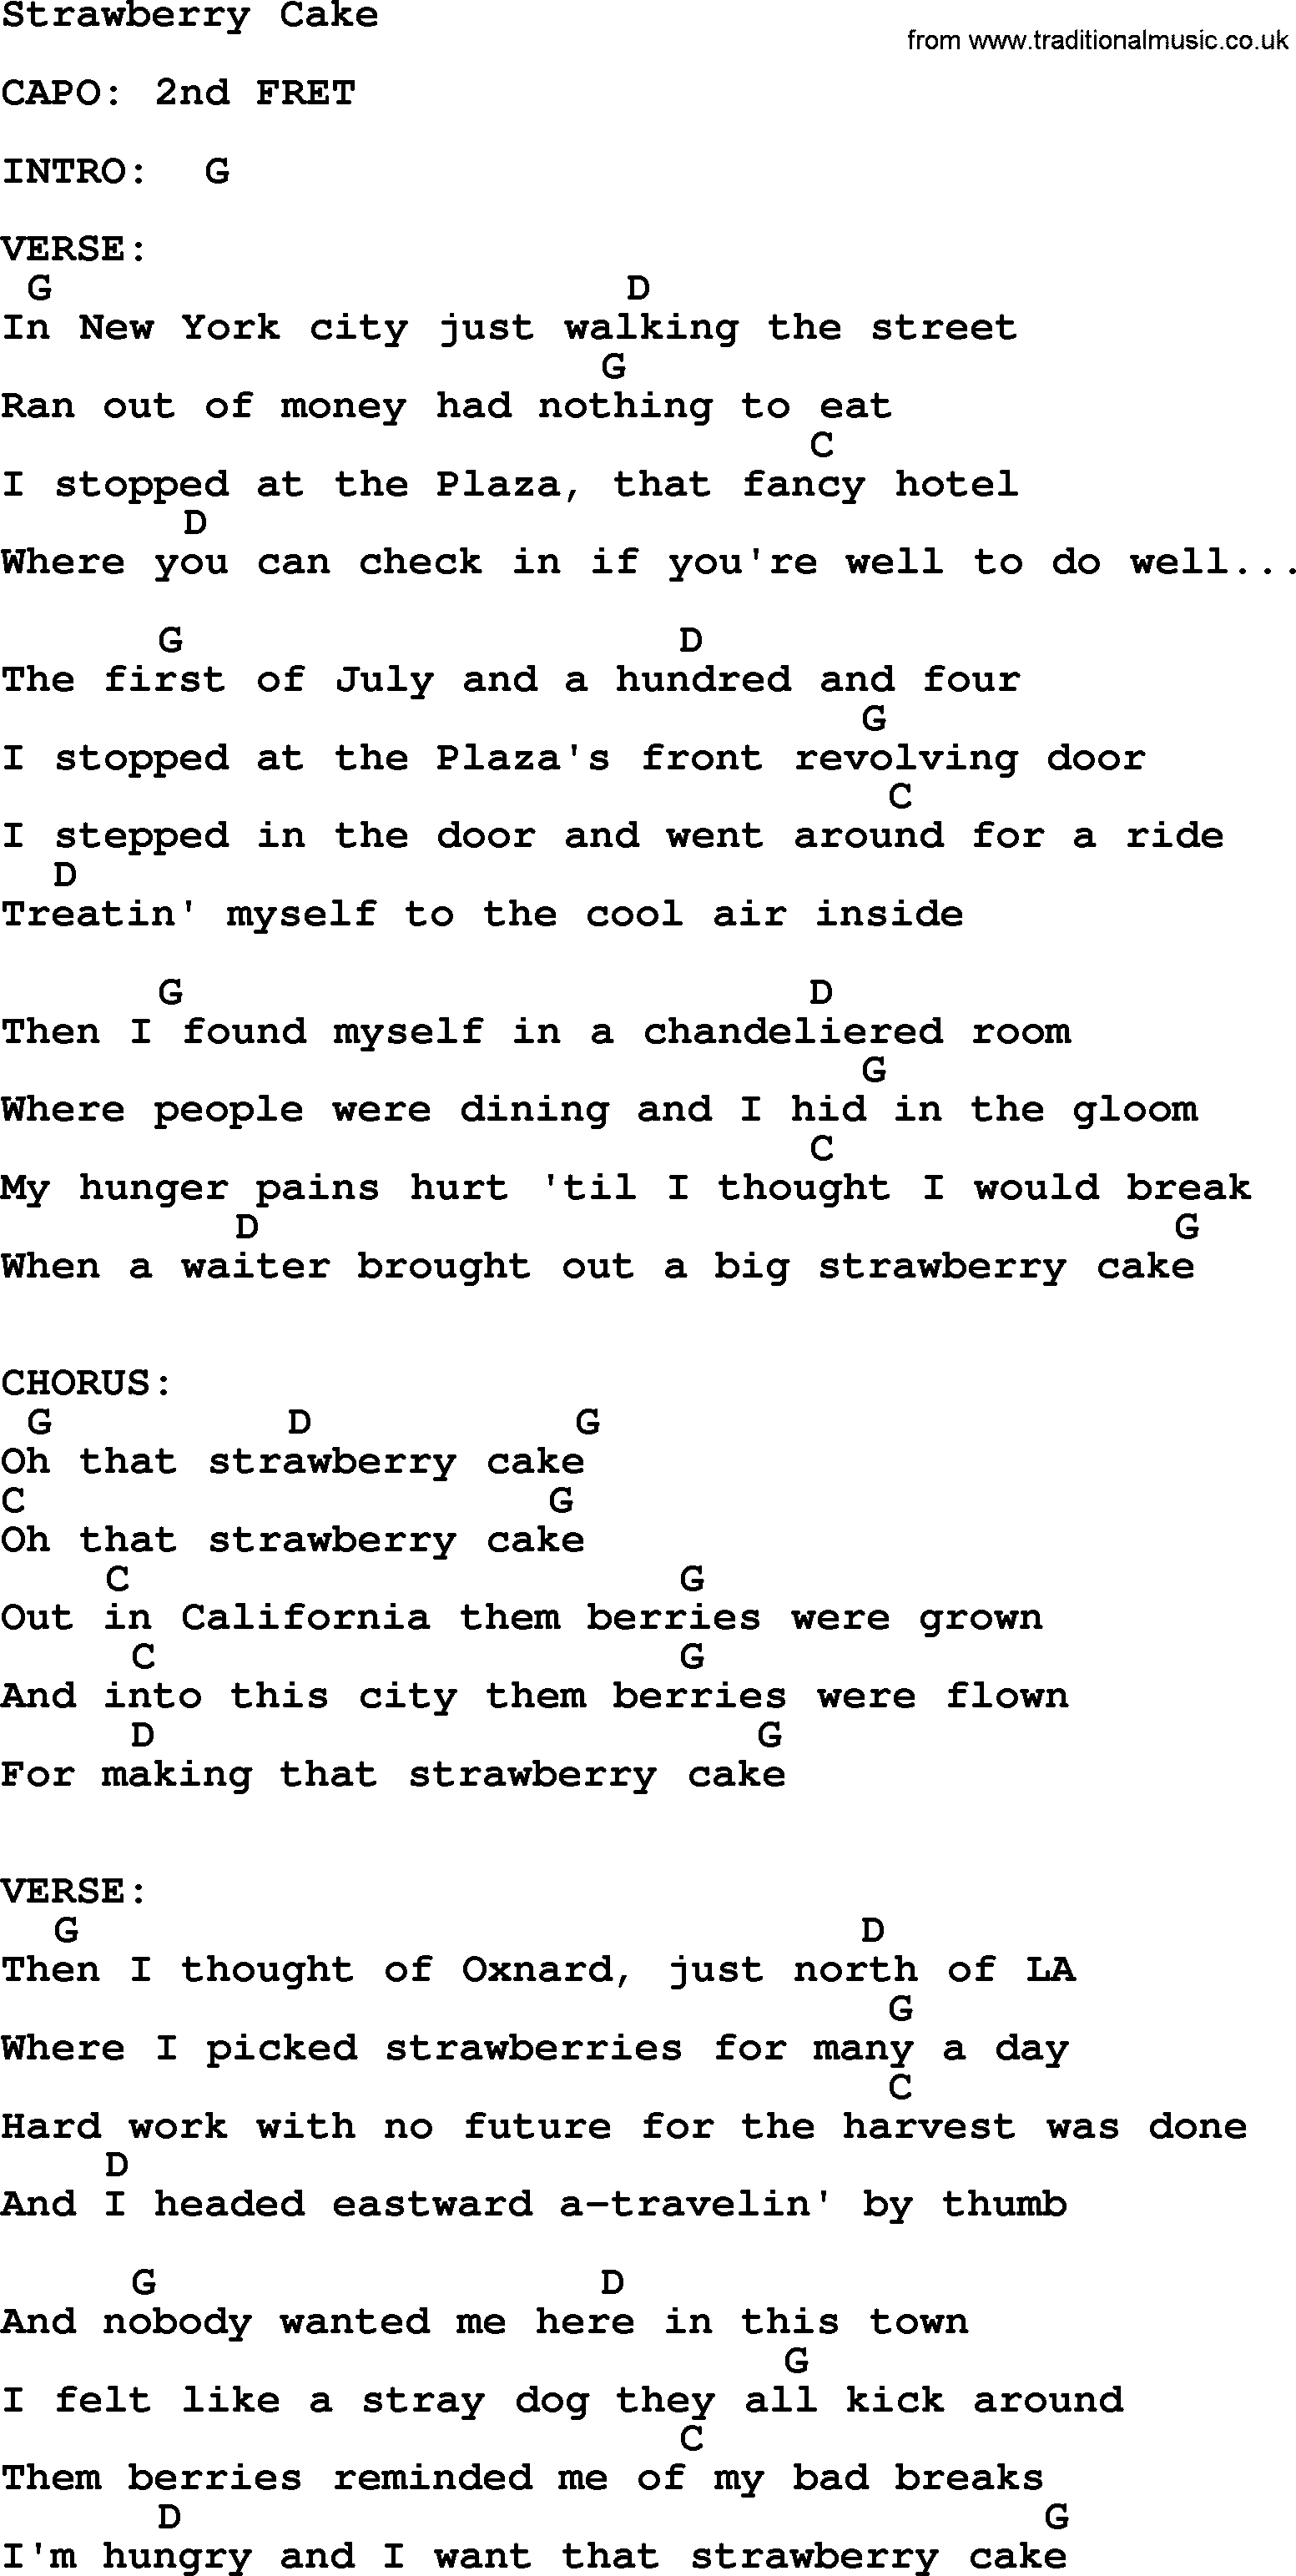 Johnny Cash song Strawberry Cake, lyrics and chords